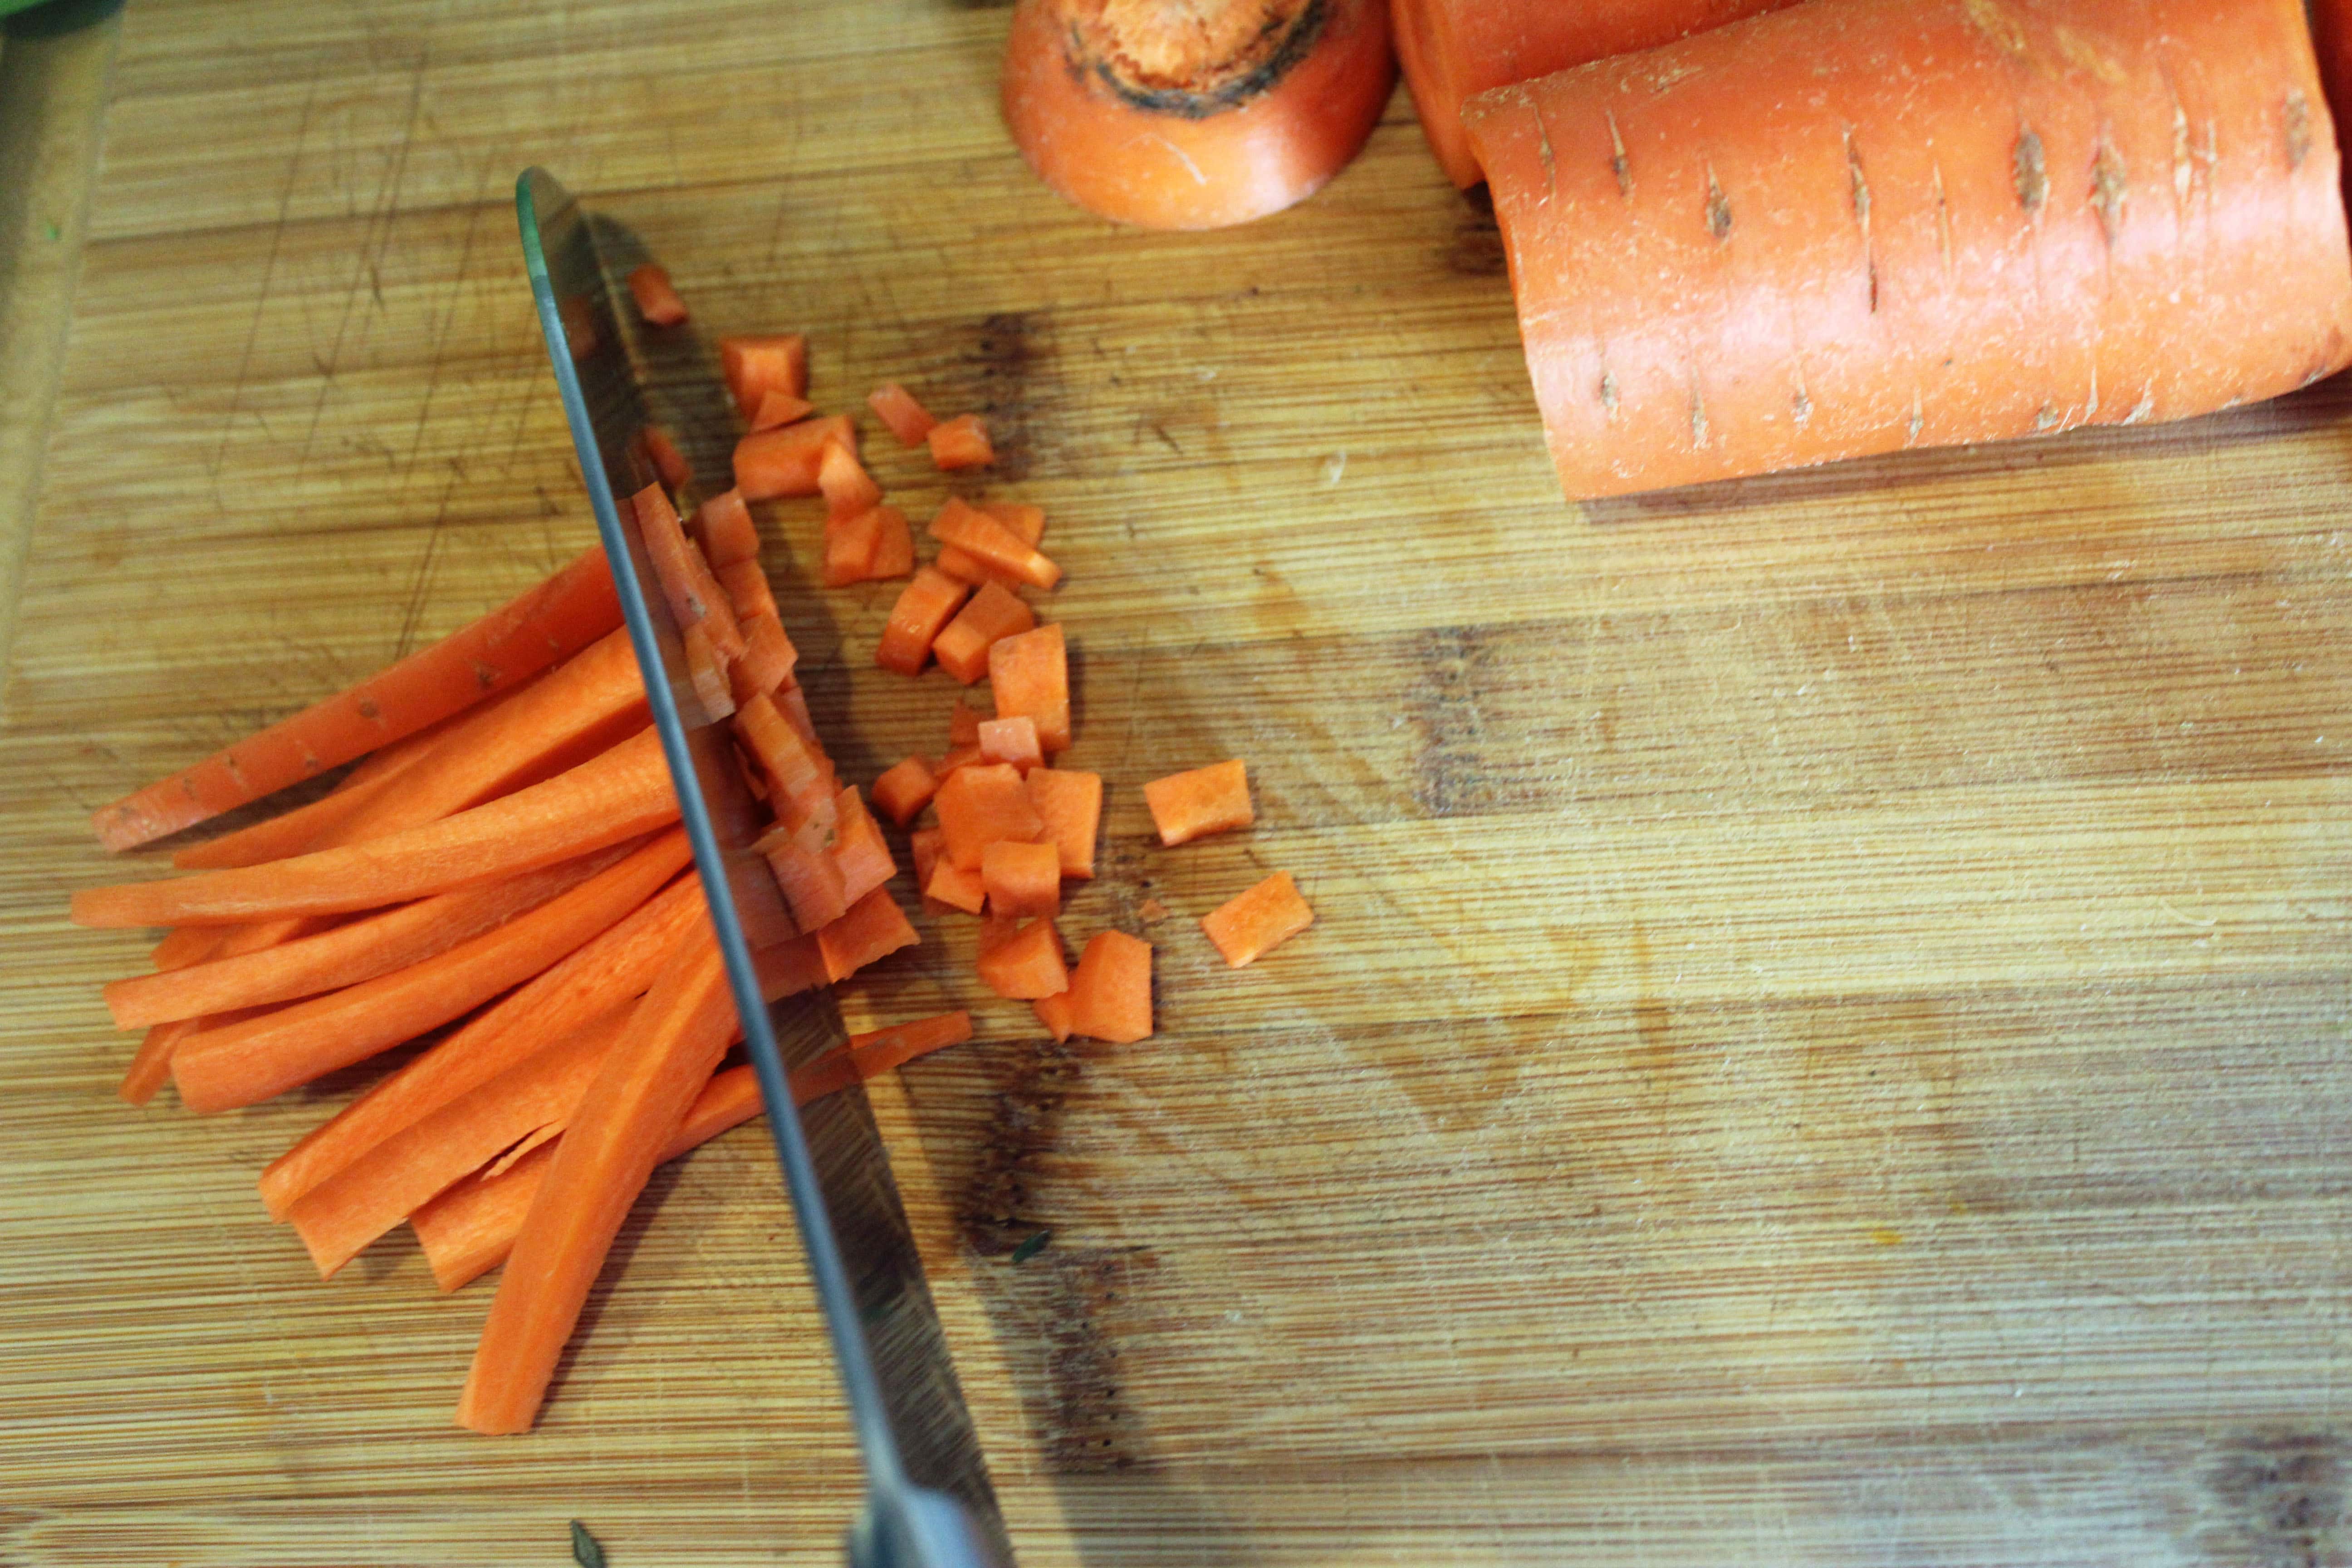 Cut carrots into little bits